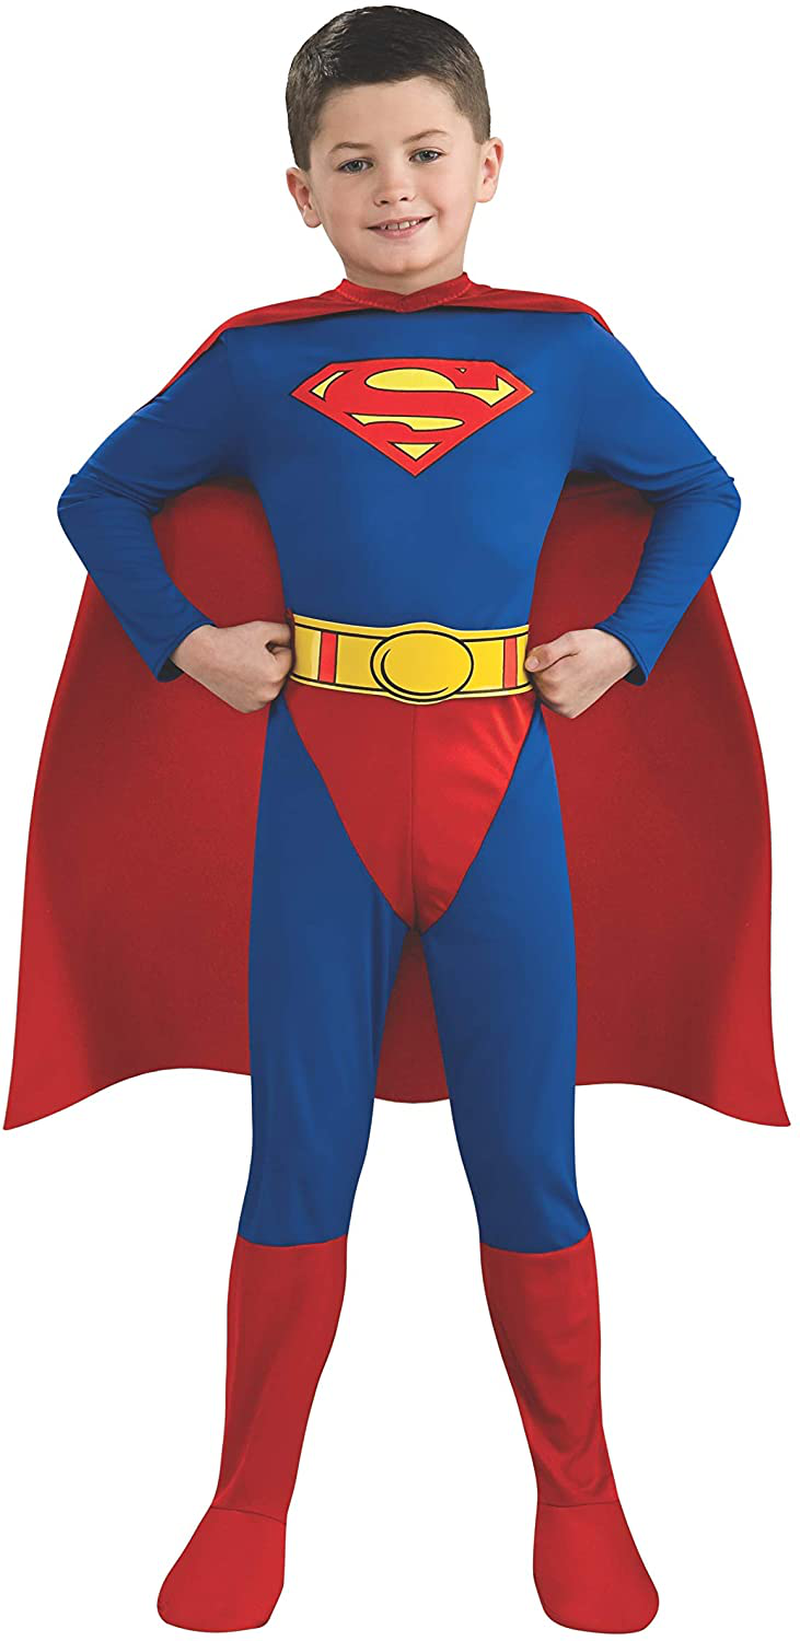 Rubie's Superman Child's Costume